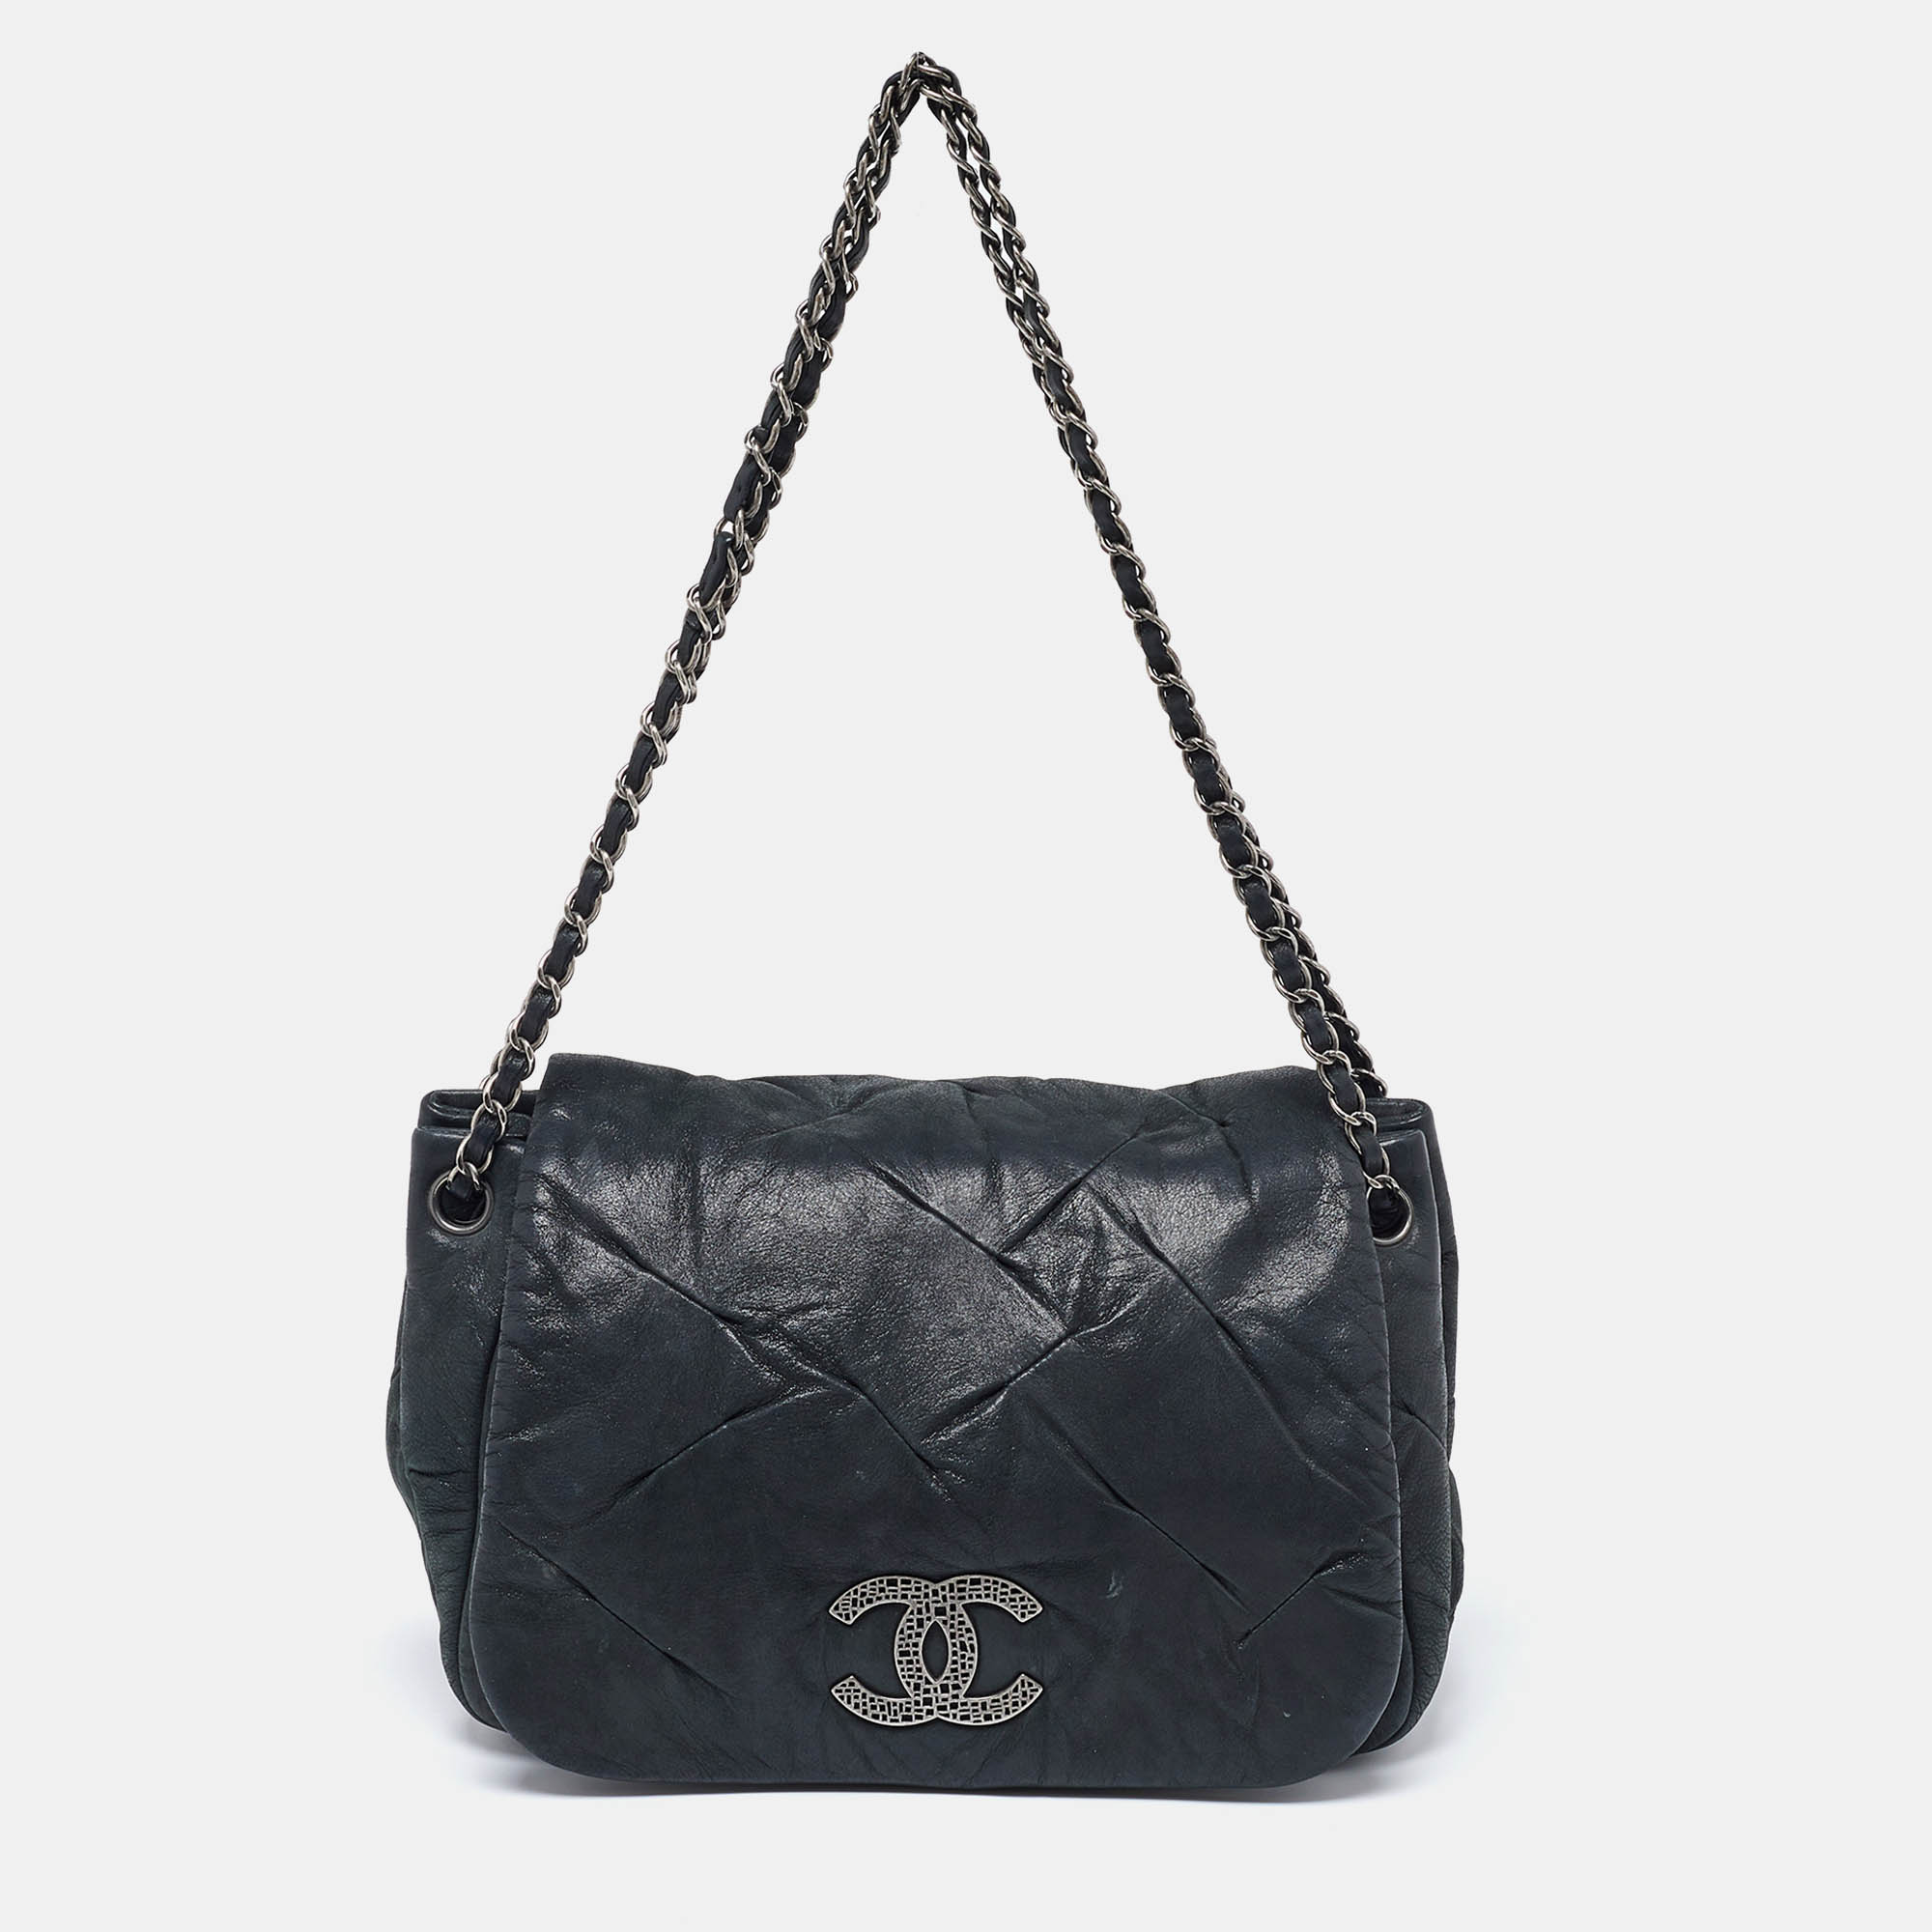 

Chanel Black Iridescent Leather Glint Accordion Flap Bag